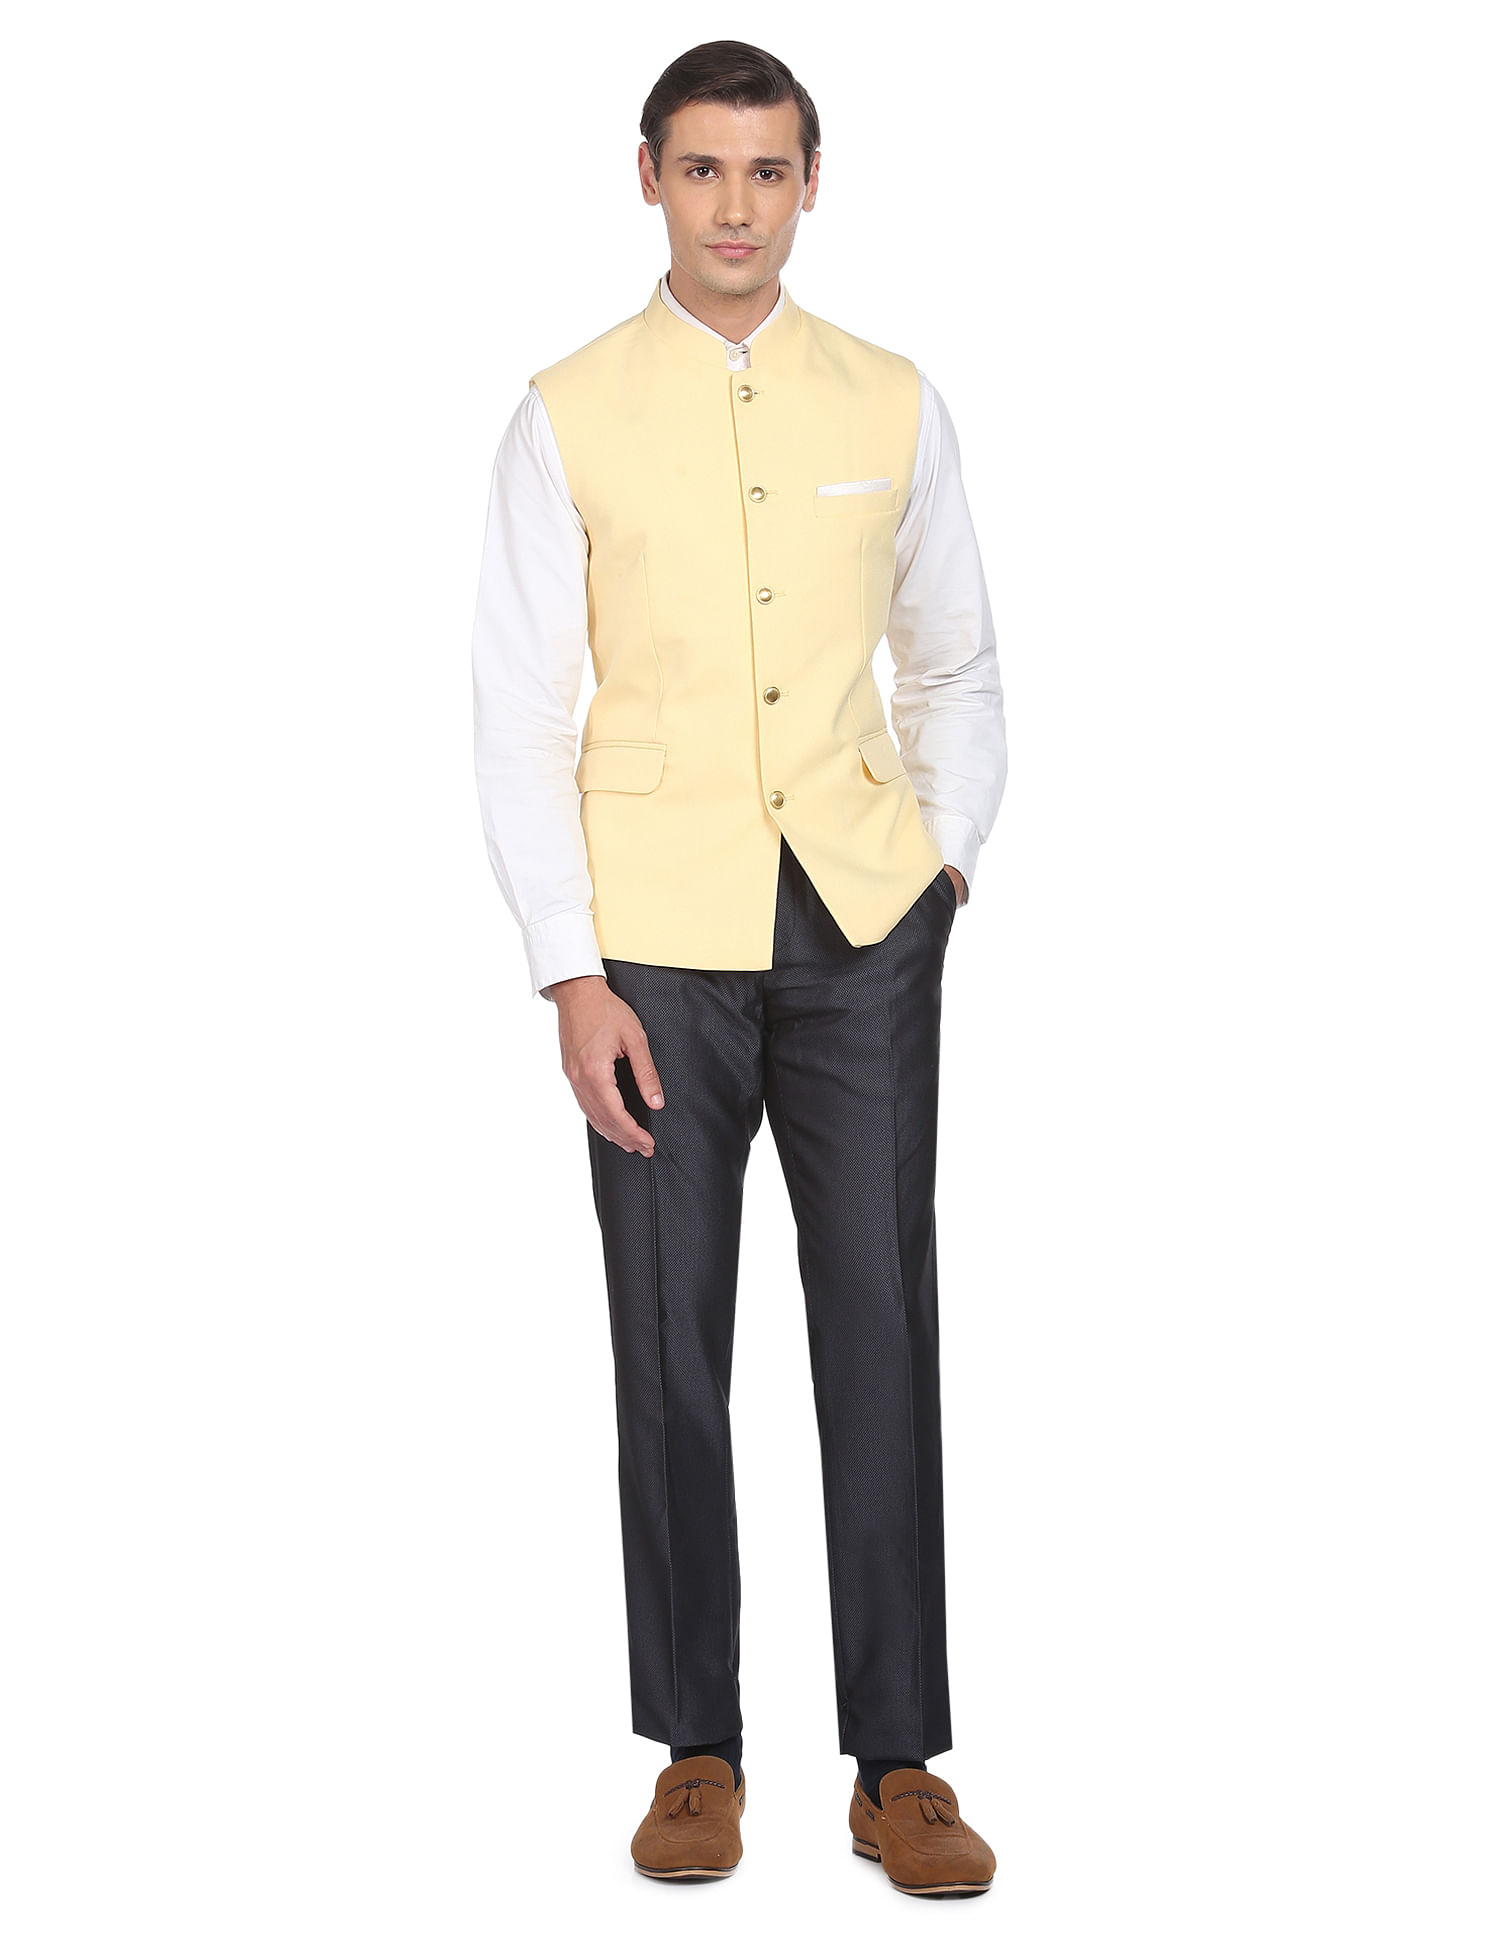 Cotton Blend Festival Wear Nehru Jacket In Cream Colour - JK4352130